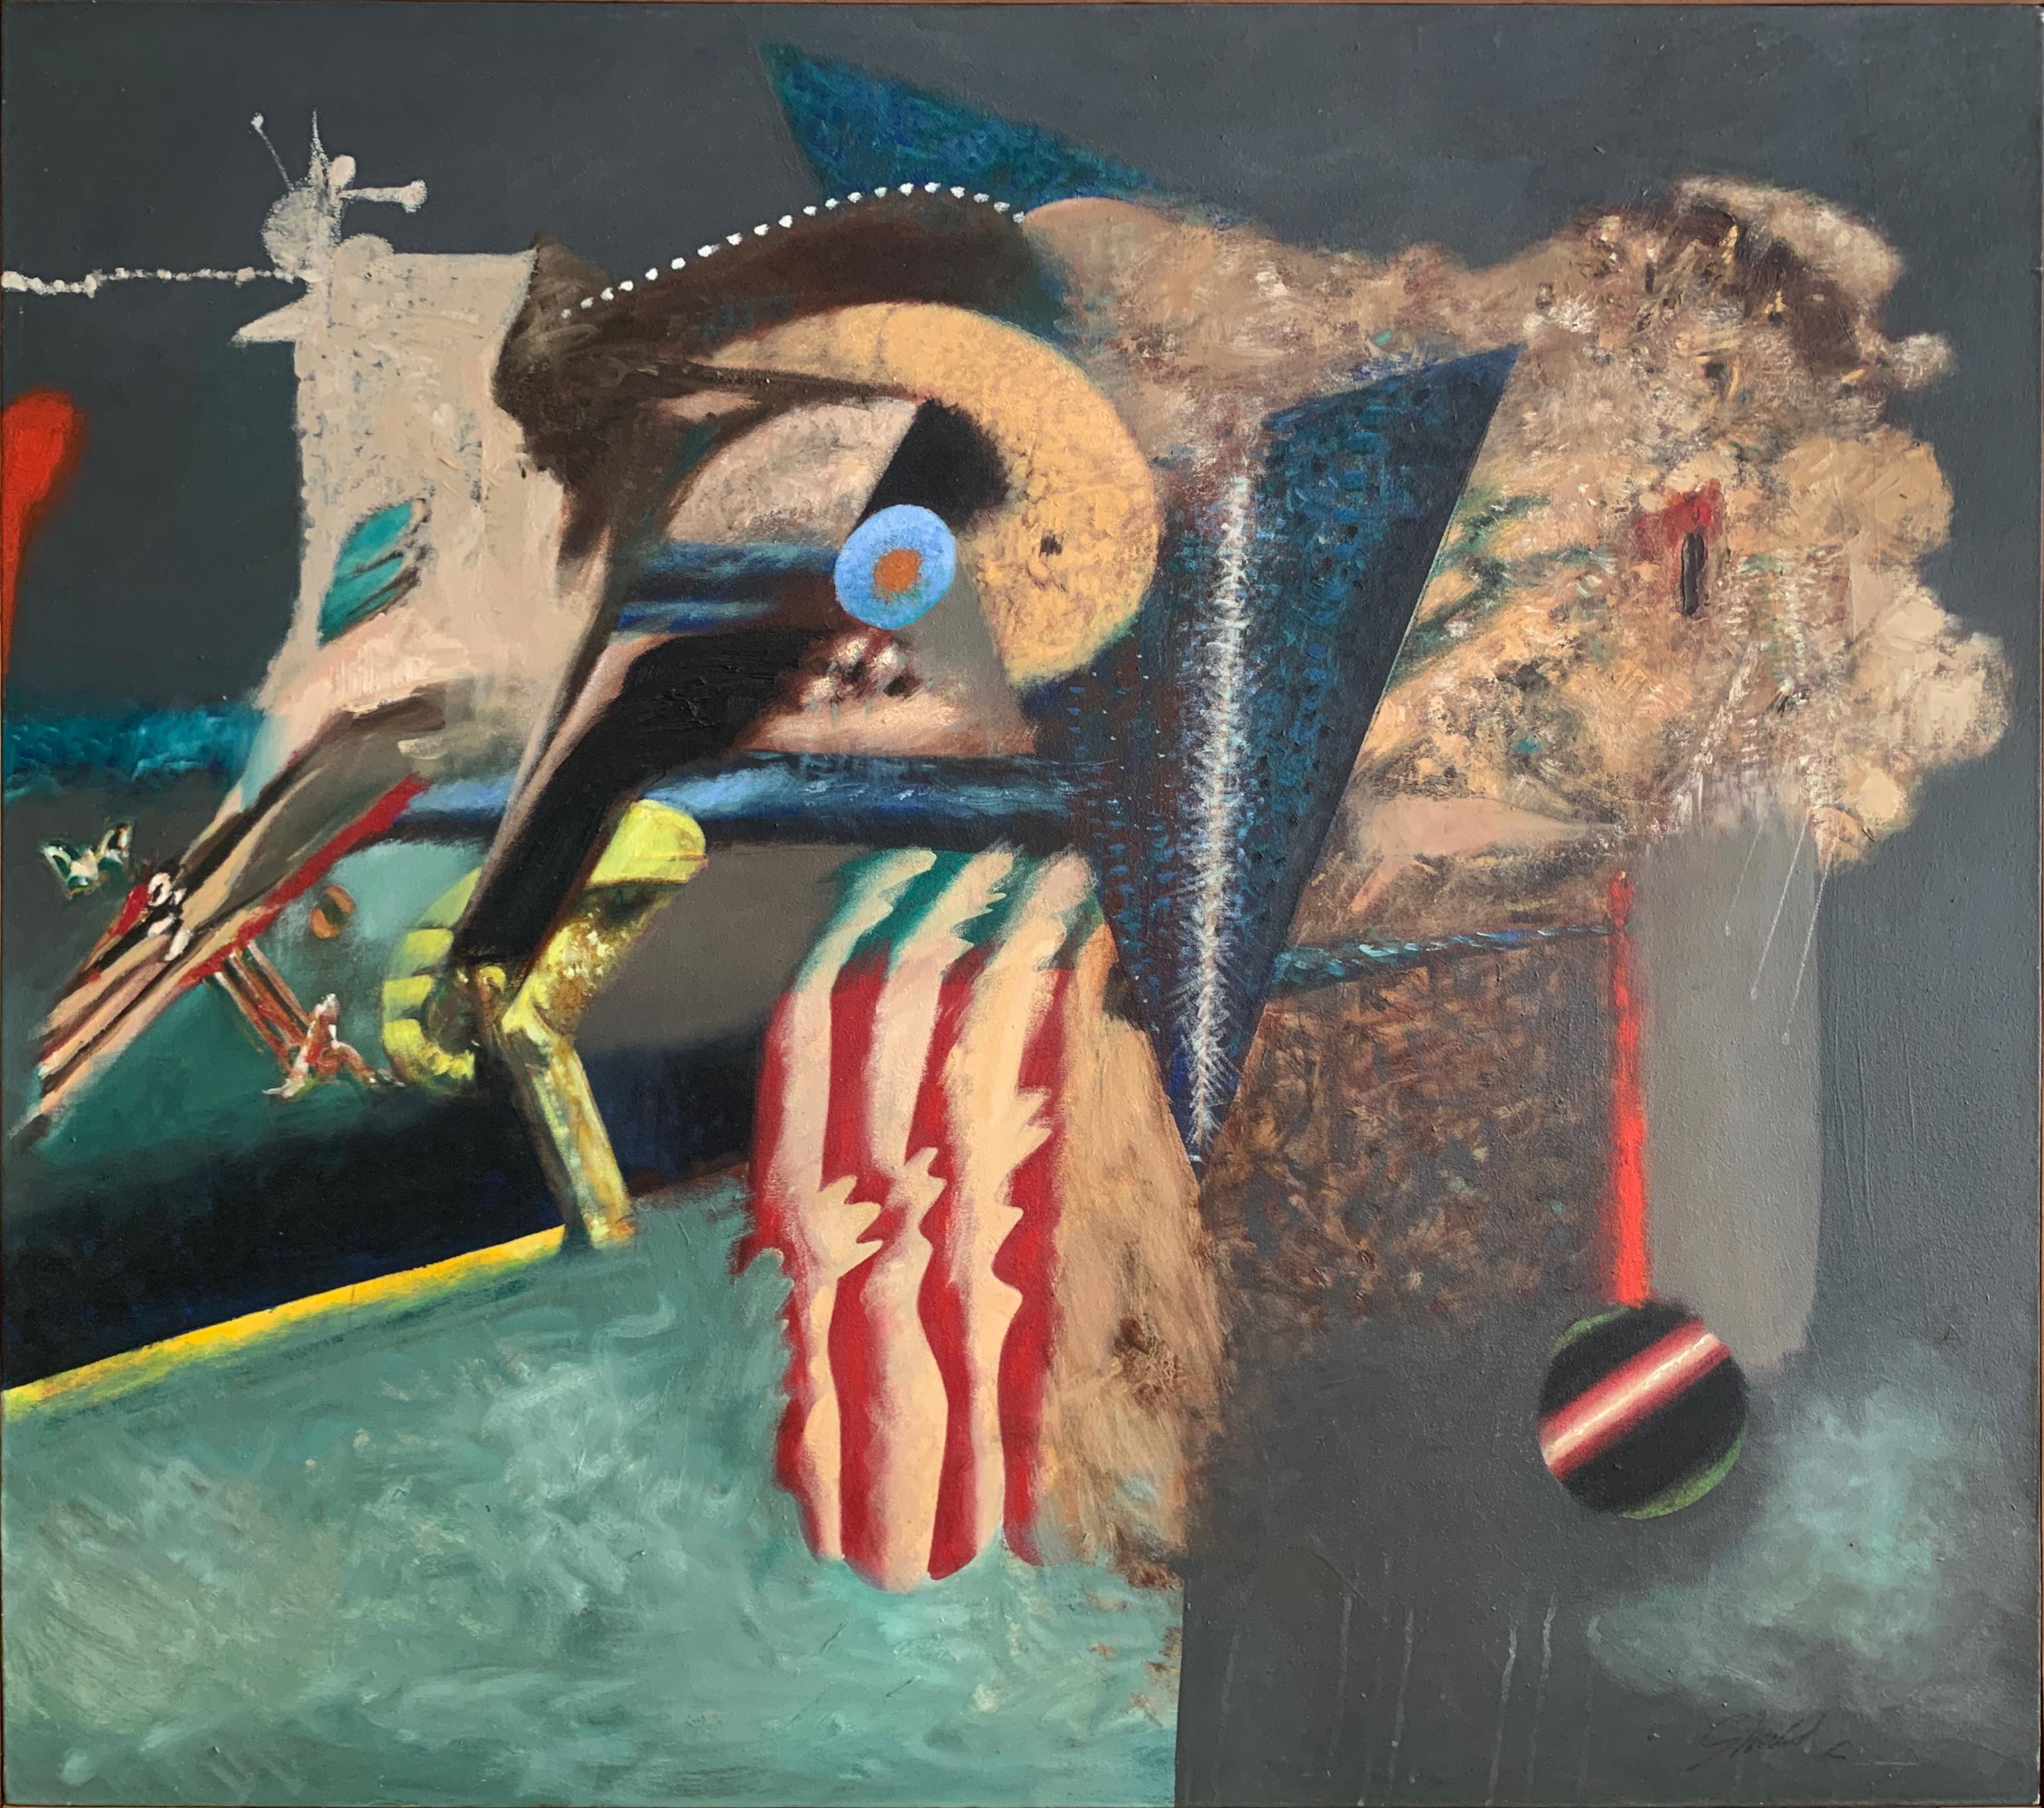 Abstract Painting William Shields  - Peinture à l'huile abstraite « Nightmare at Baskin Robbins » de l'illustrateur Bill Shields